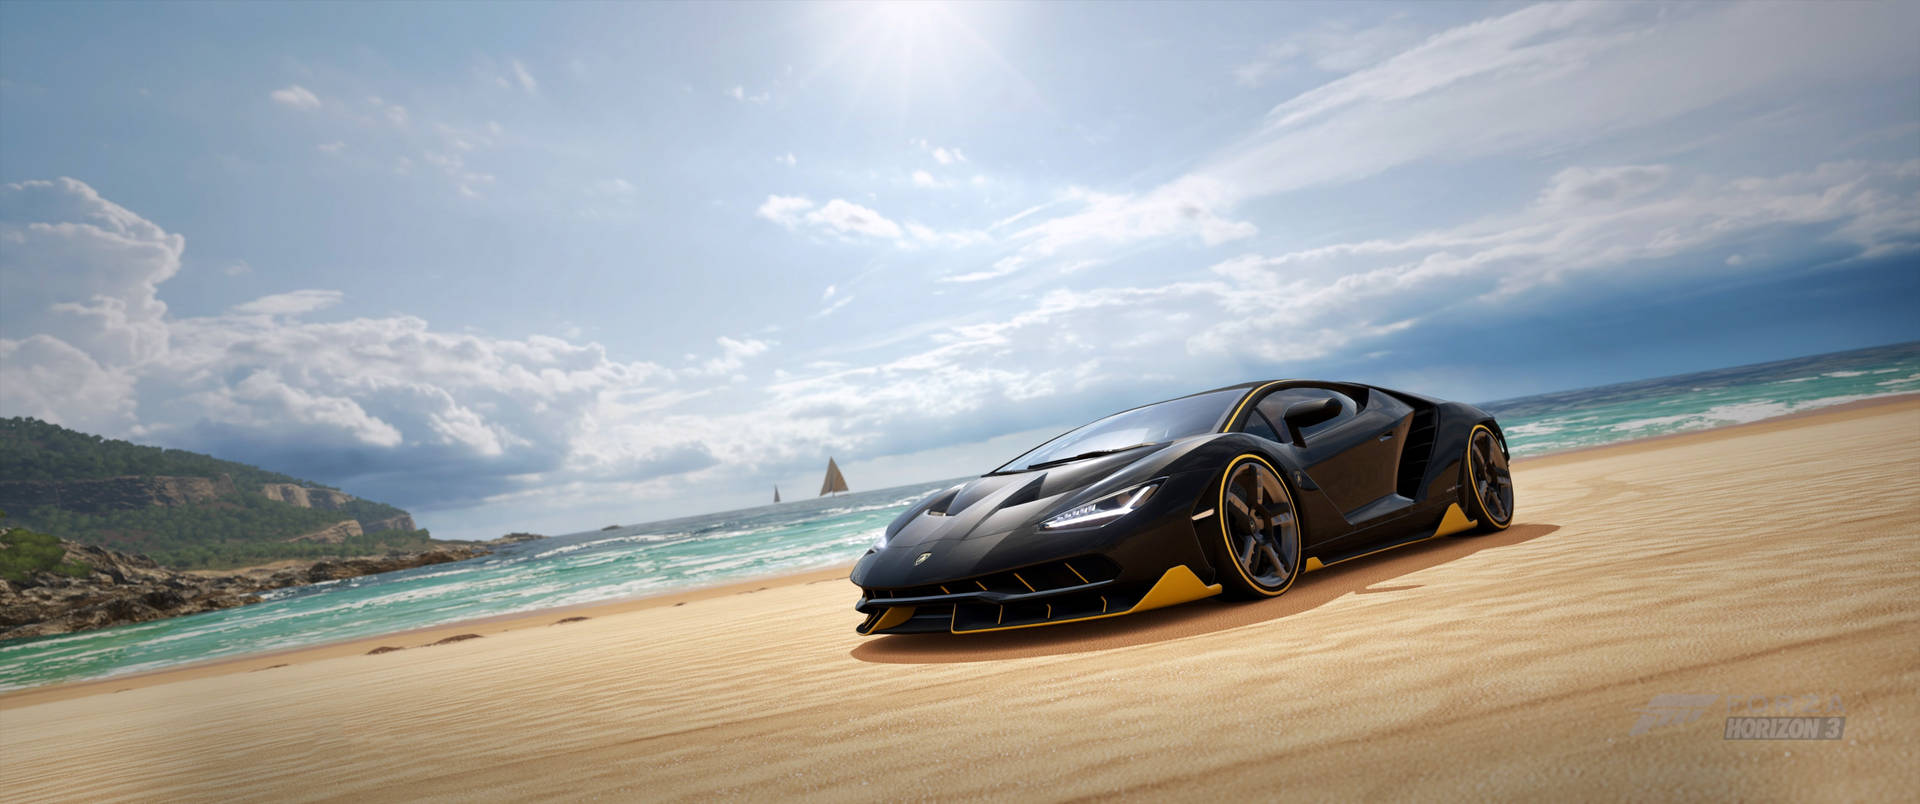 Black Lamborghini In Forza Horizon 3 Background